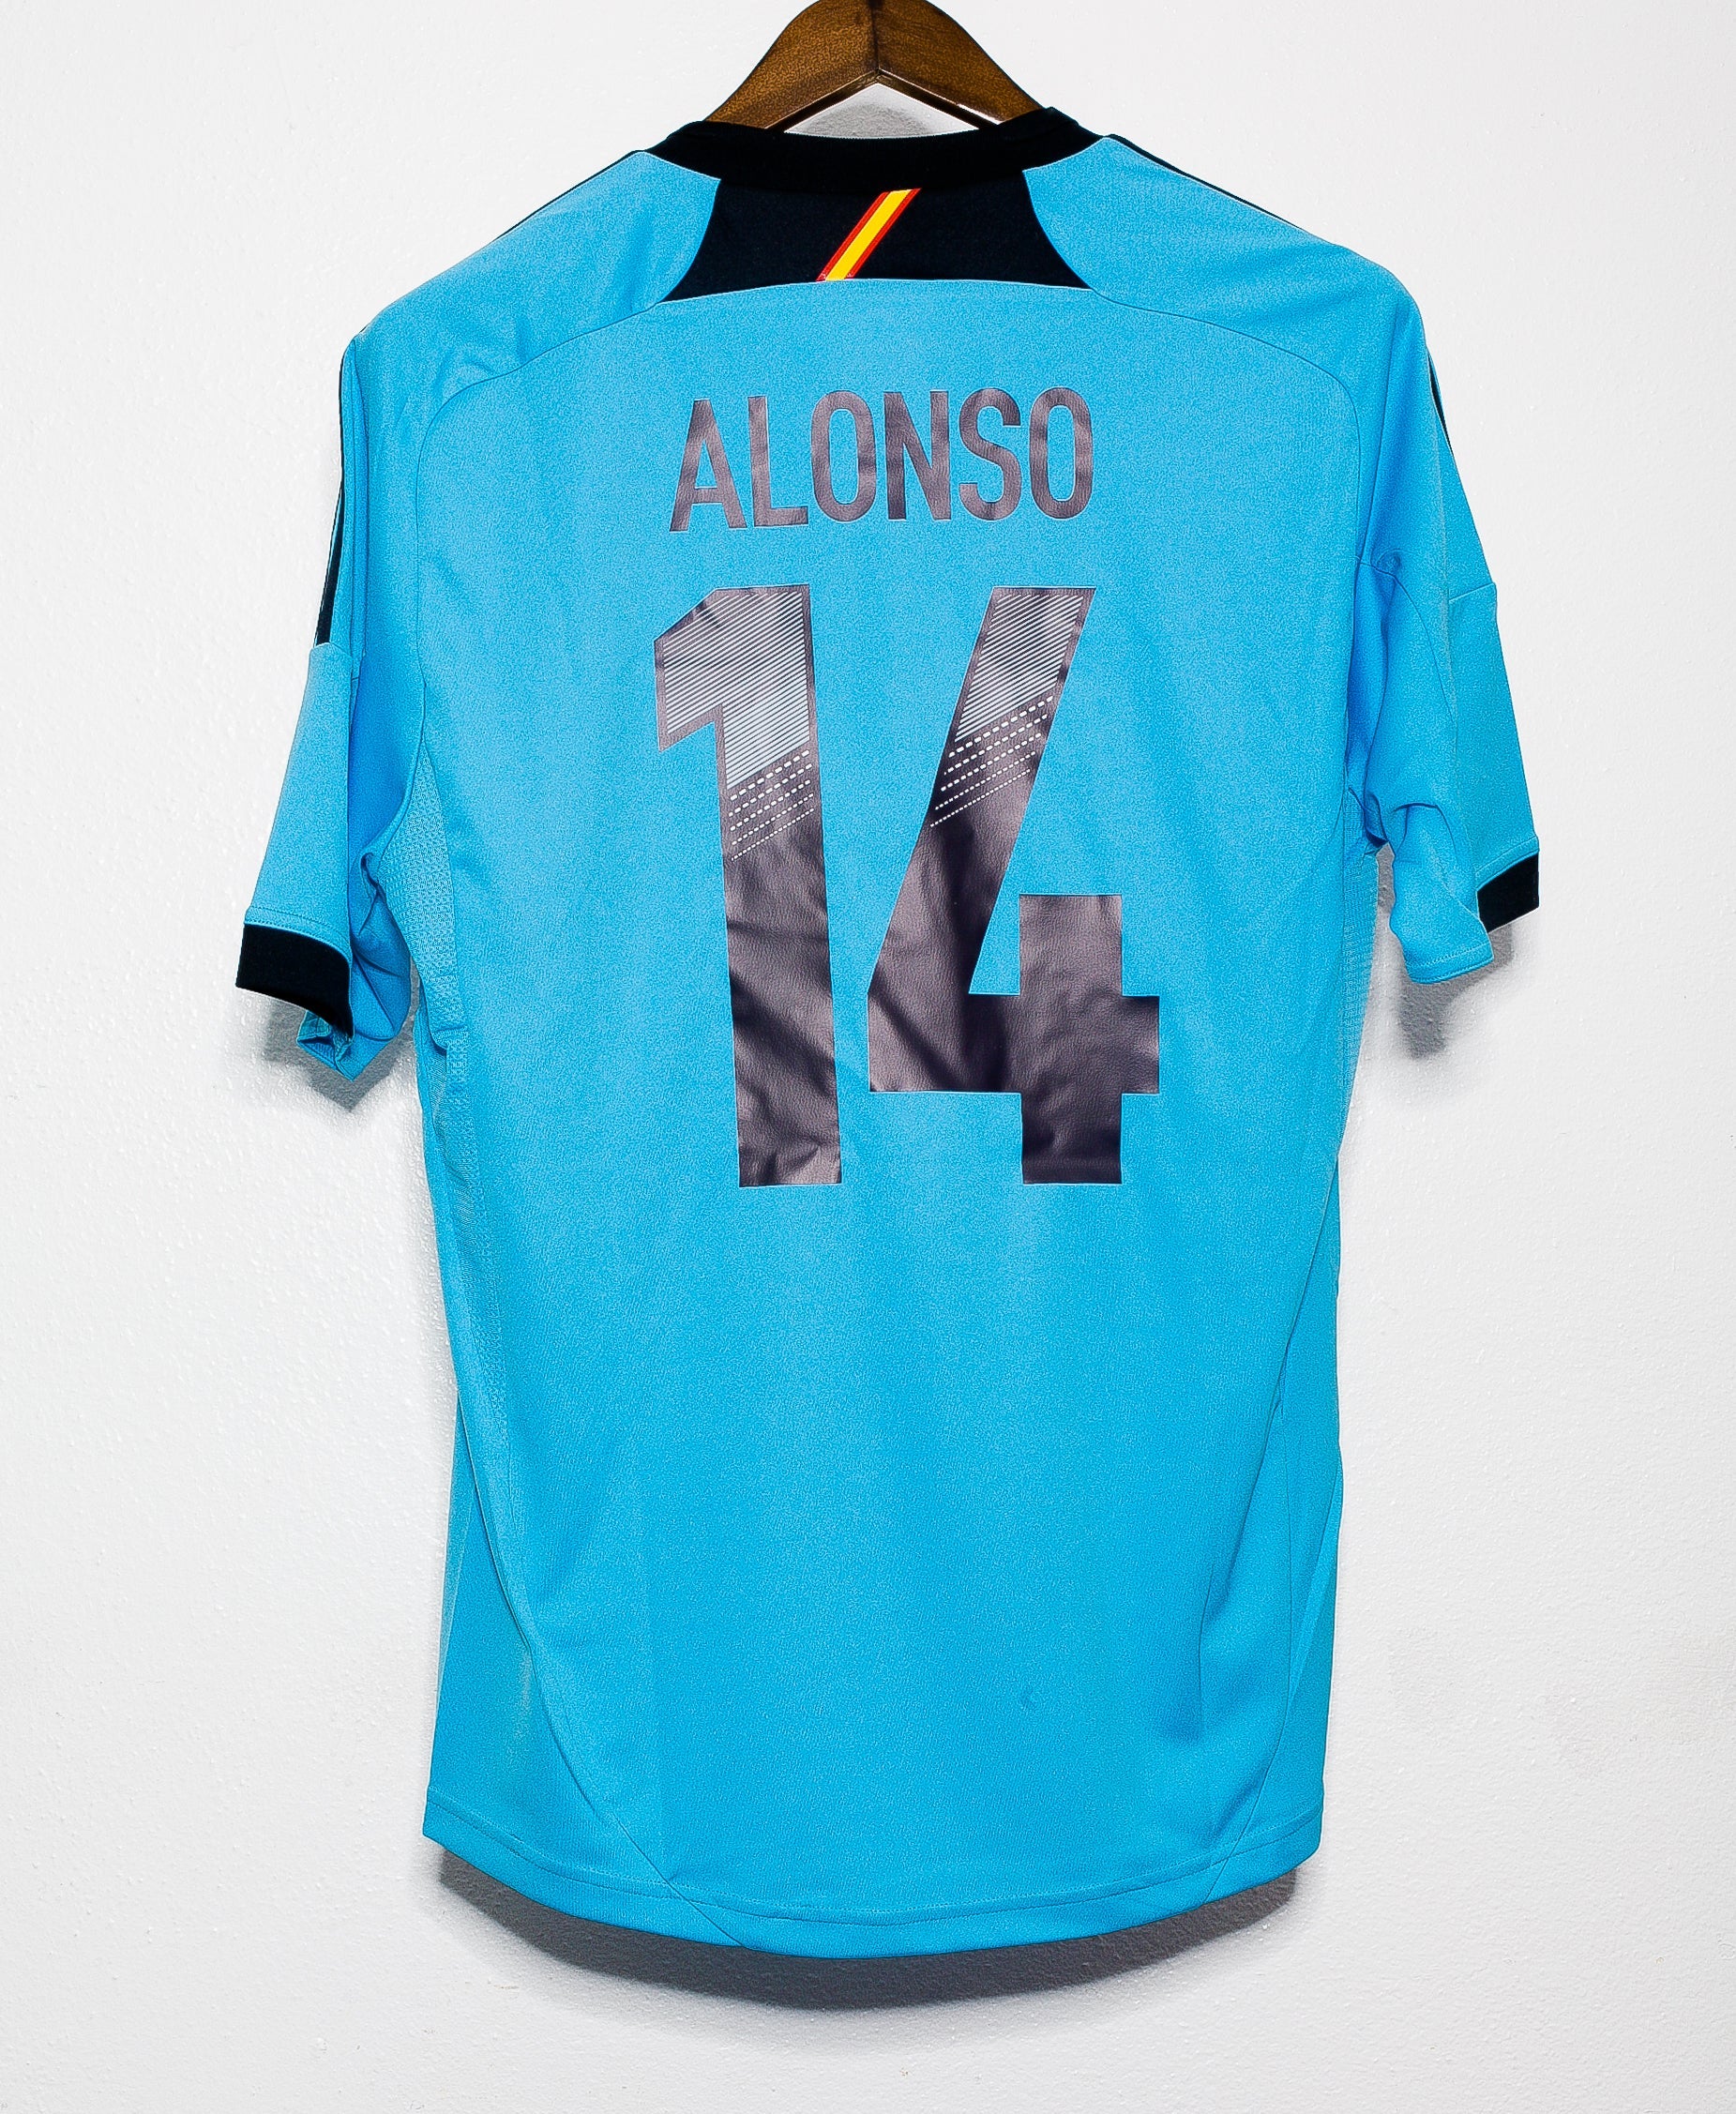 Xabi Alonso's beloved Spain jersey